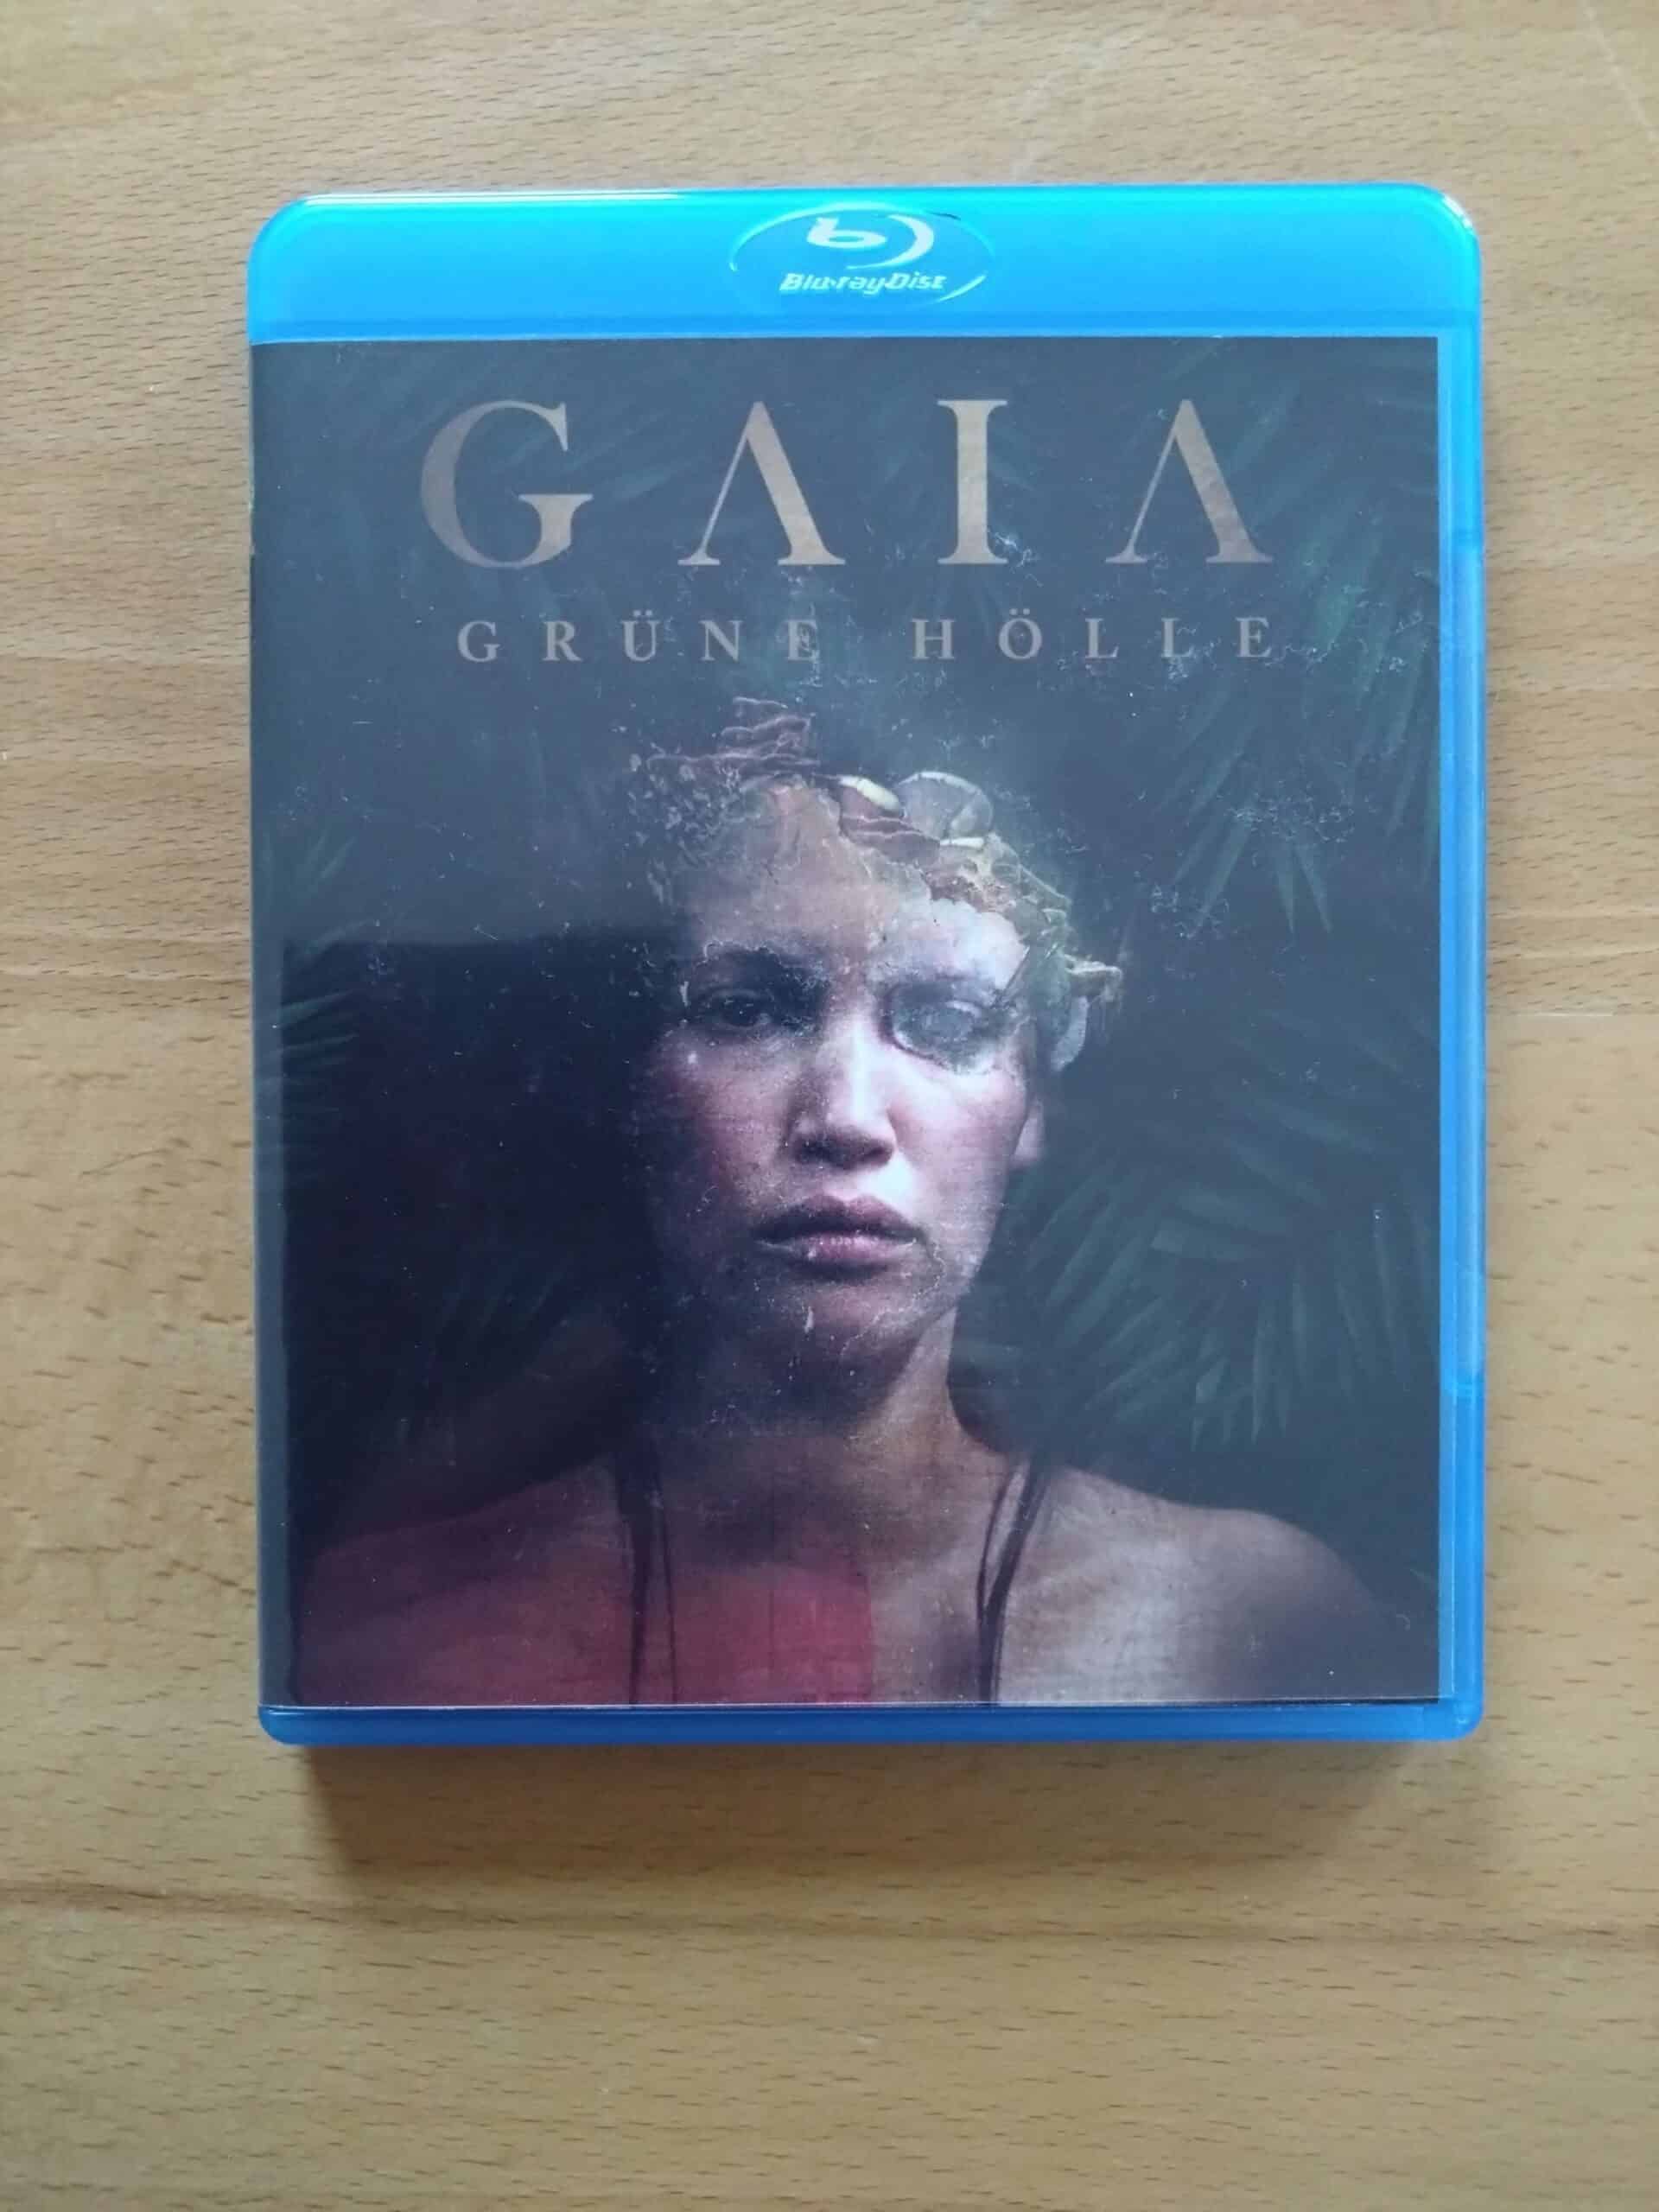 [Review] Gaia – Grüne Hölle Amaray Blu-Ray